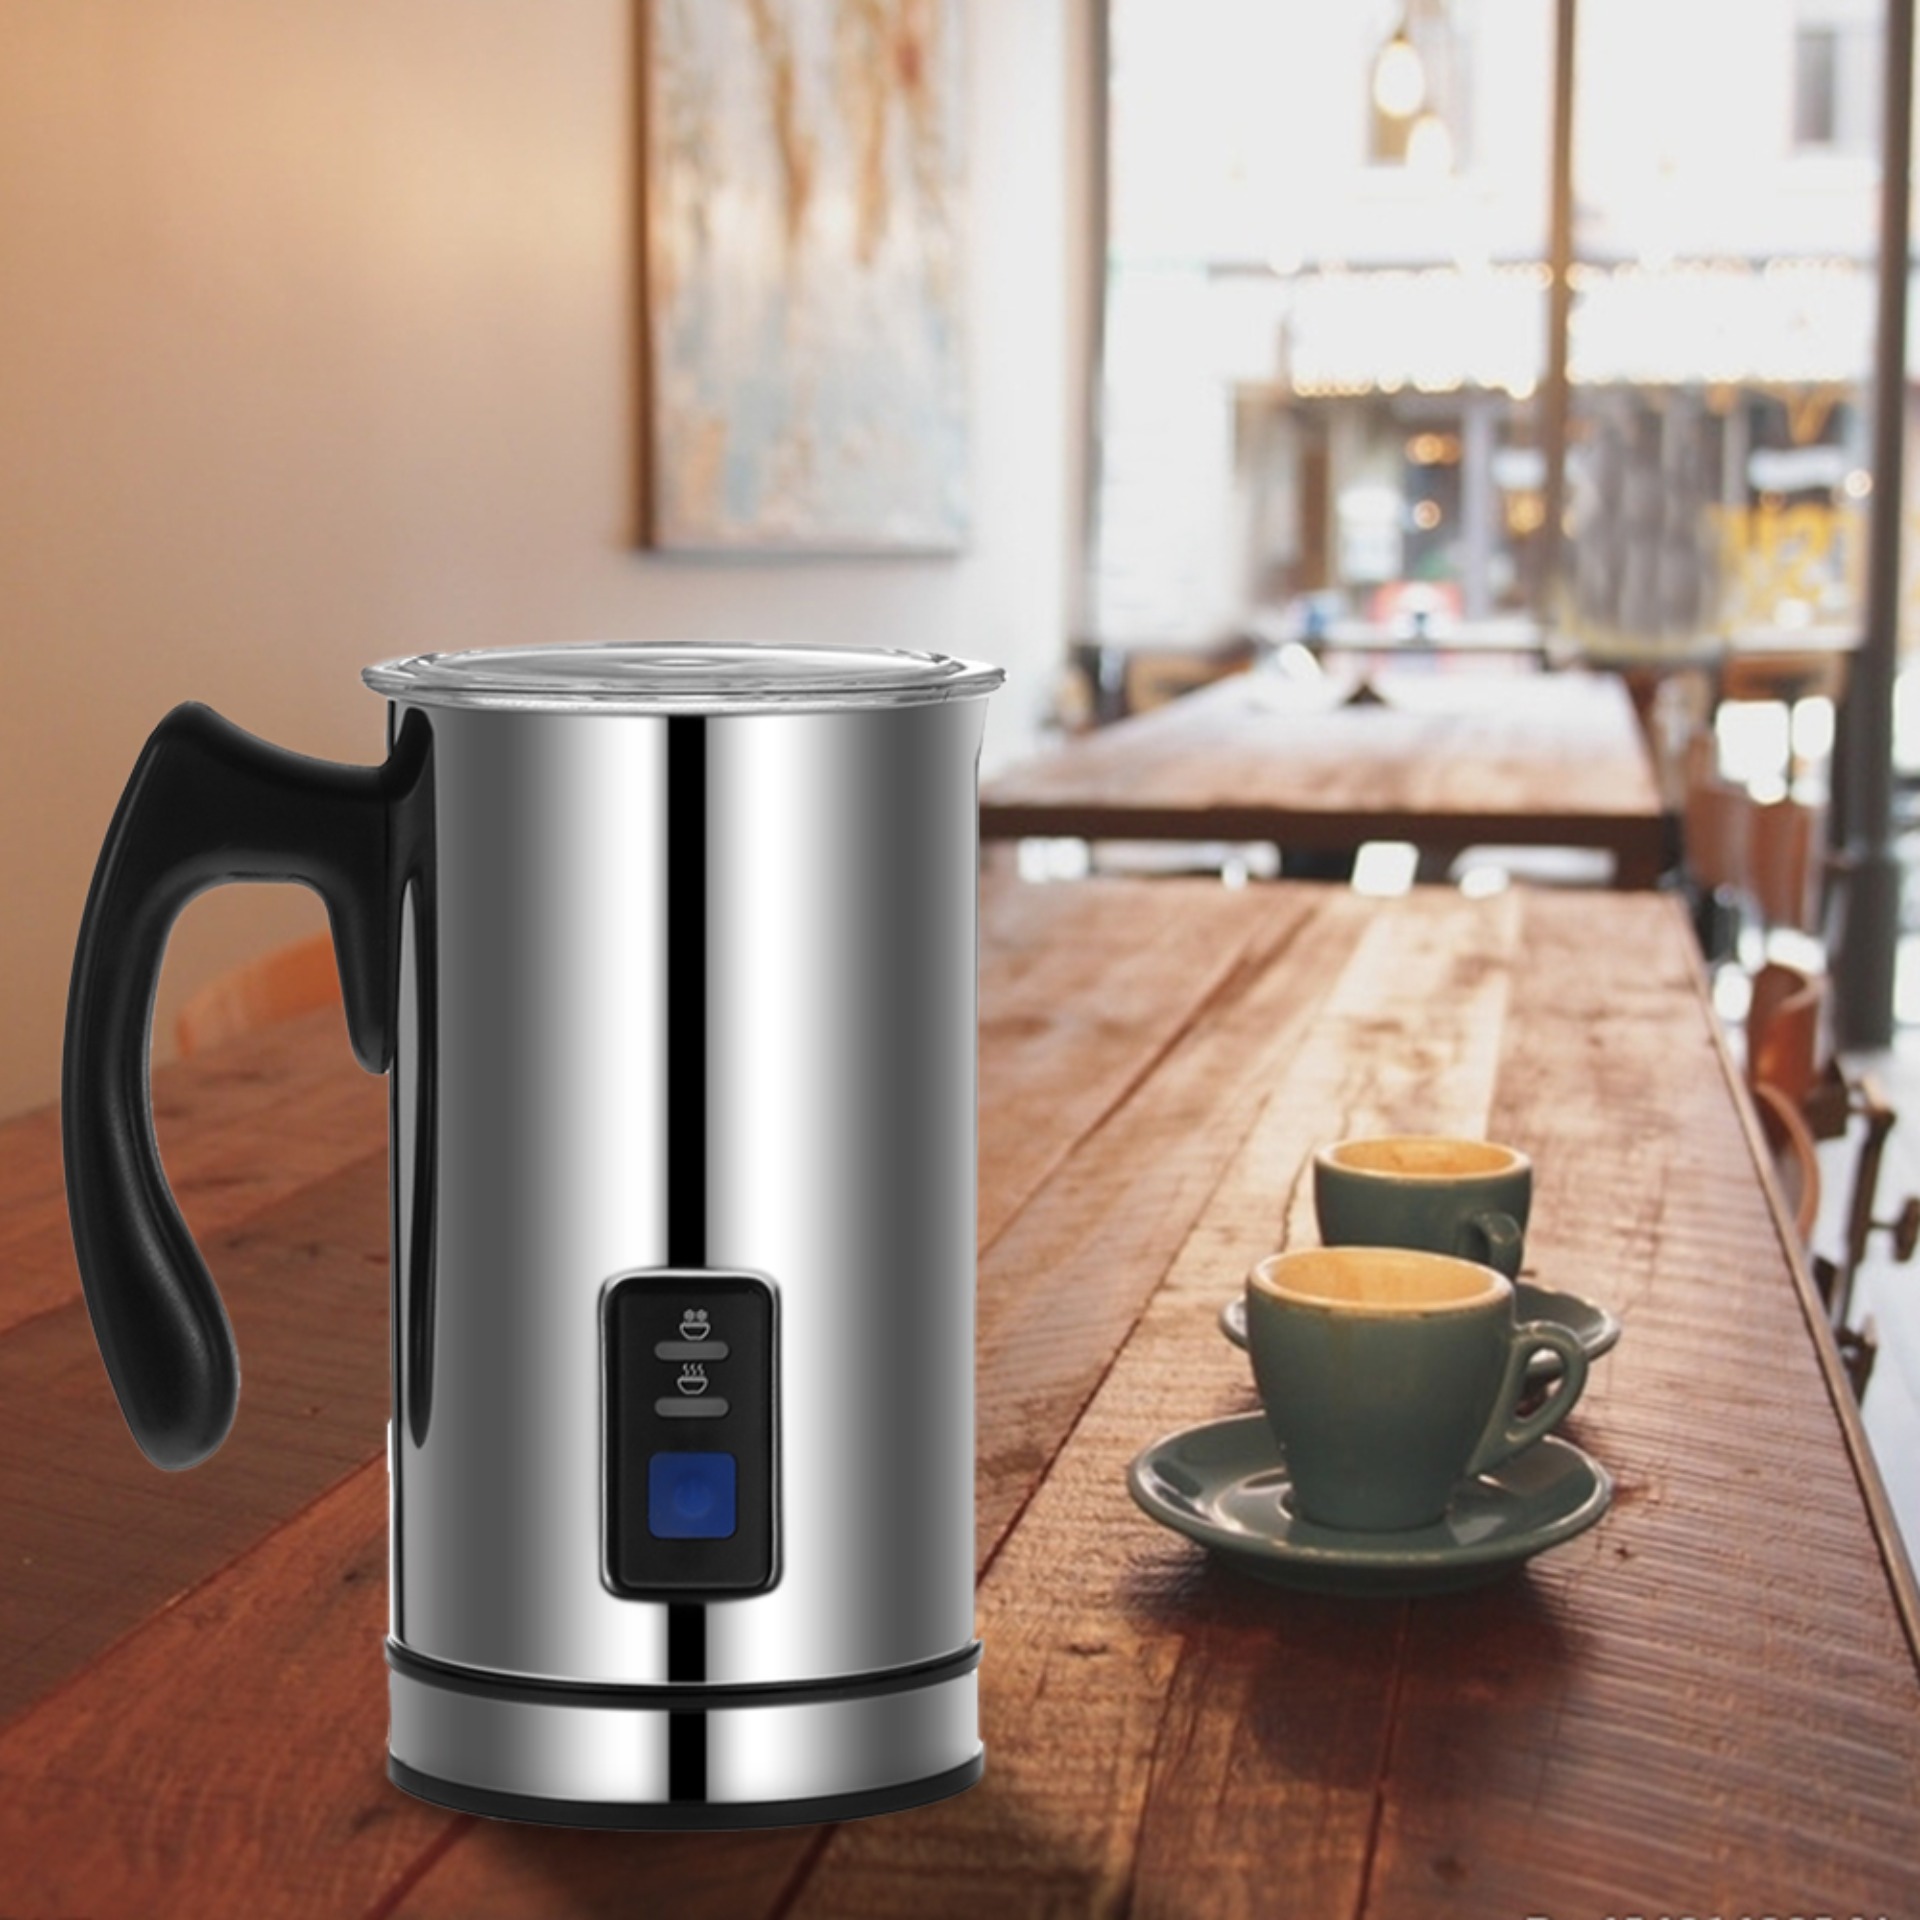 Biolomix เครื่องทำกาแฟ ขนาดเล็ก ใช้งานง่าย สามารถผลิตฟองและควบคุมความร้อนได้ดี